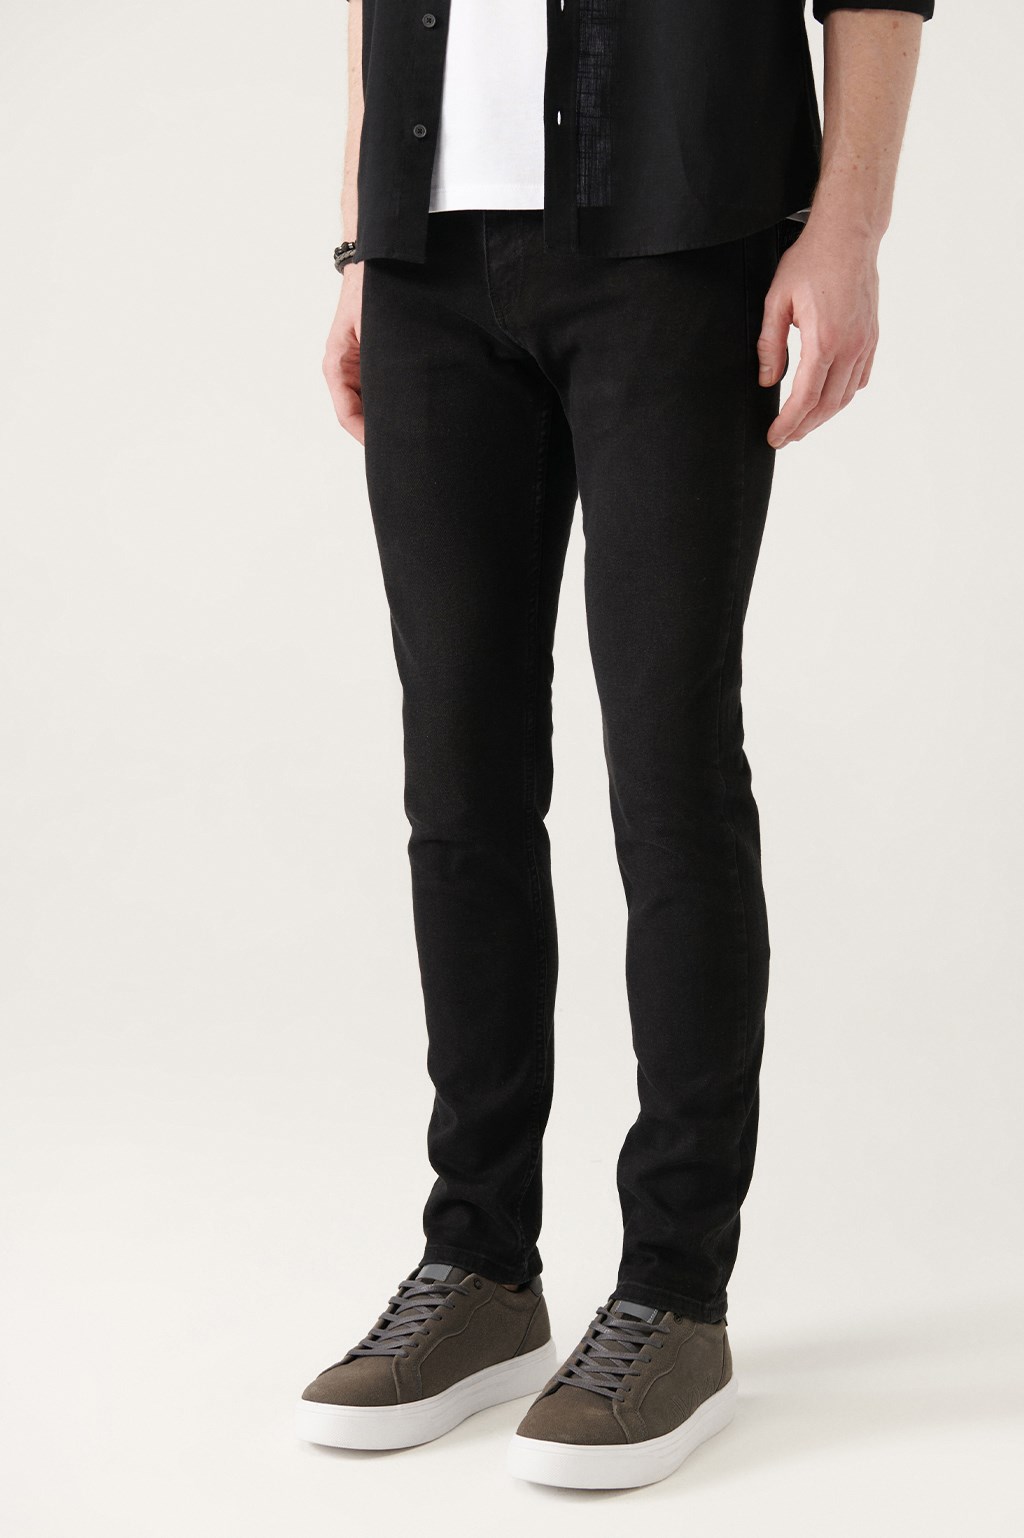 Siyah Slim Fit Jean Pantolon E003512-03 - AVVA